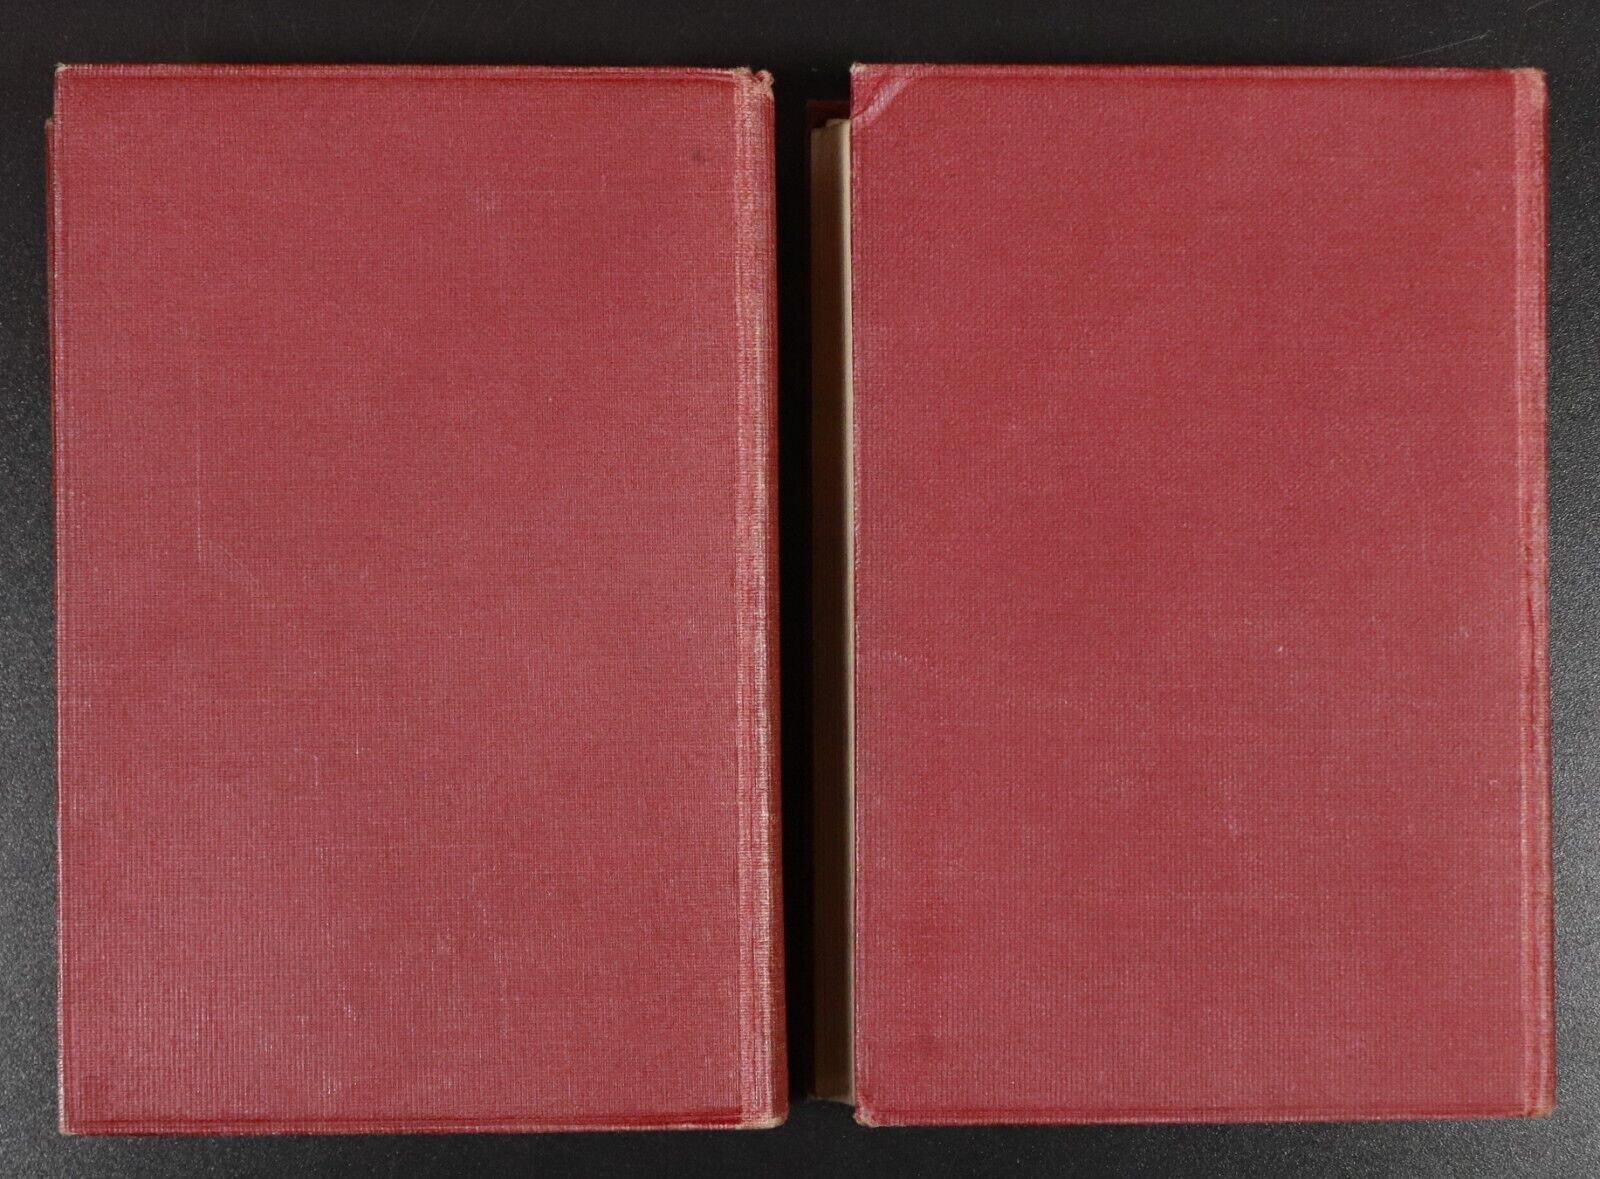 c1920 2vol The Count Of Monte-Cristo by Alexandre Dumas Antique Book Set